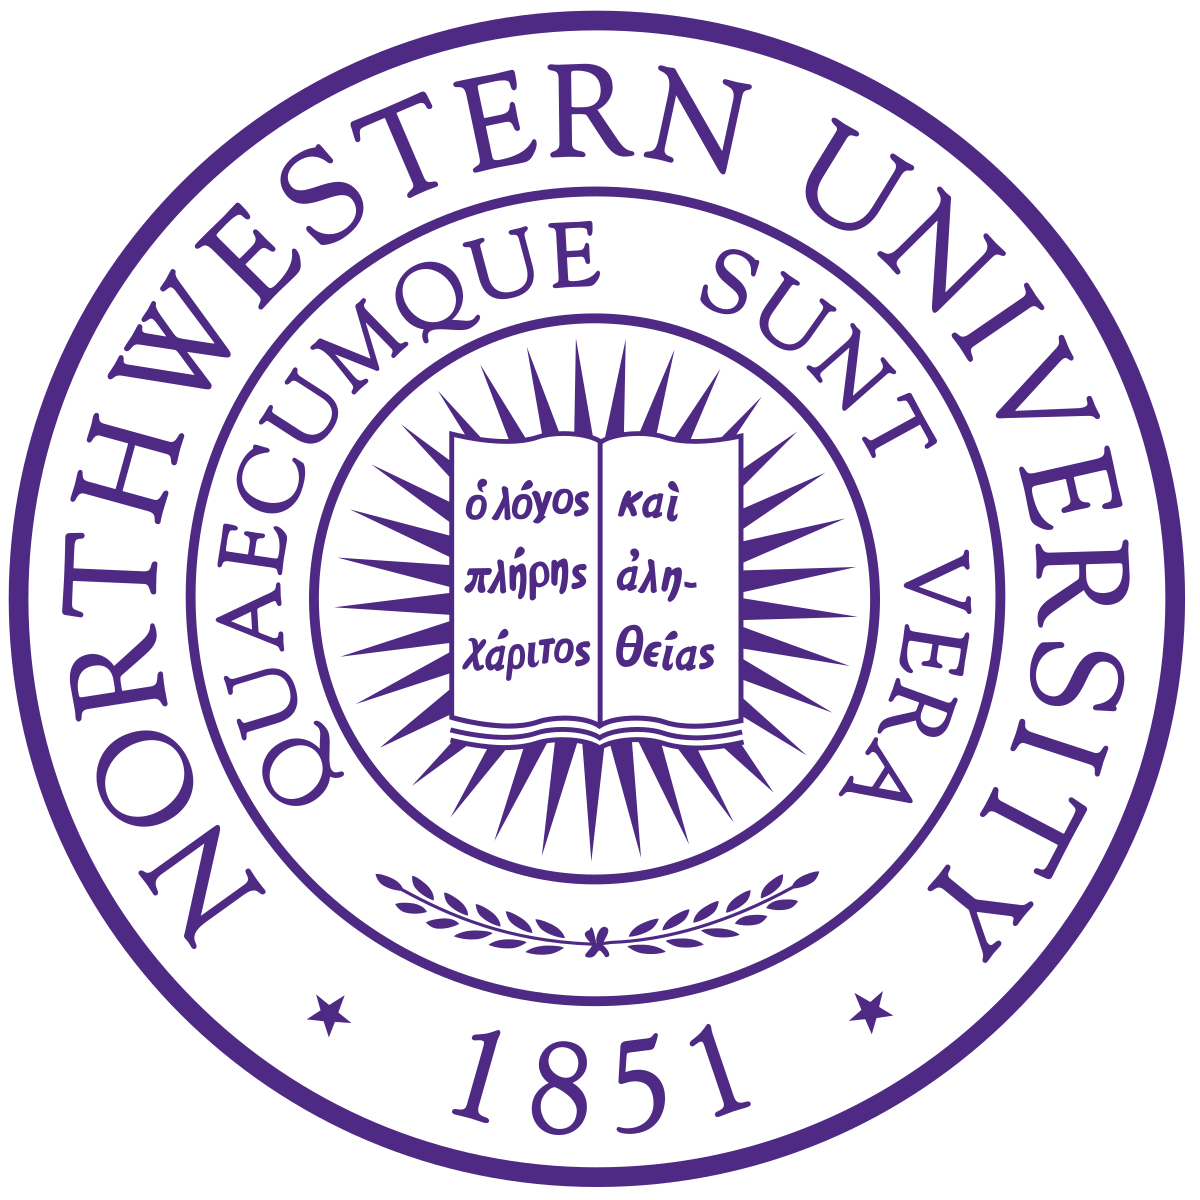 Northwestern University in Evanston